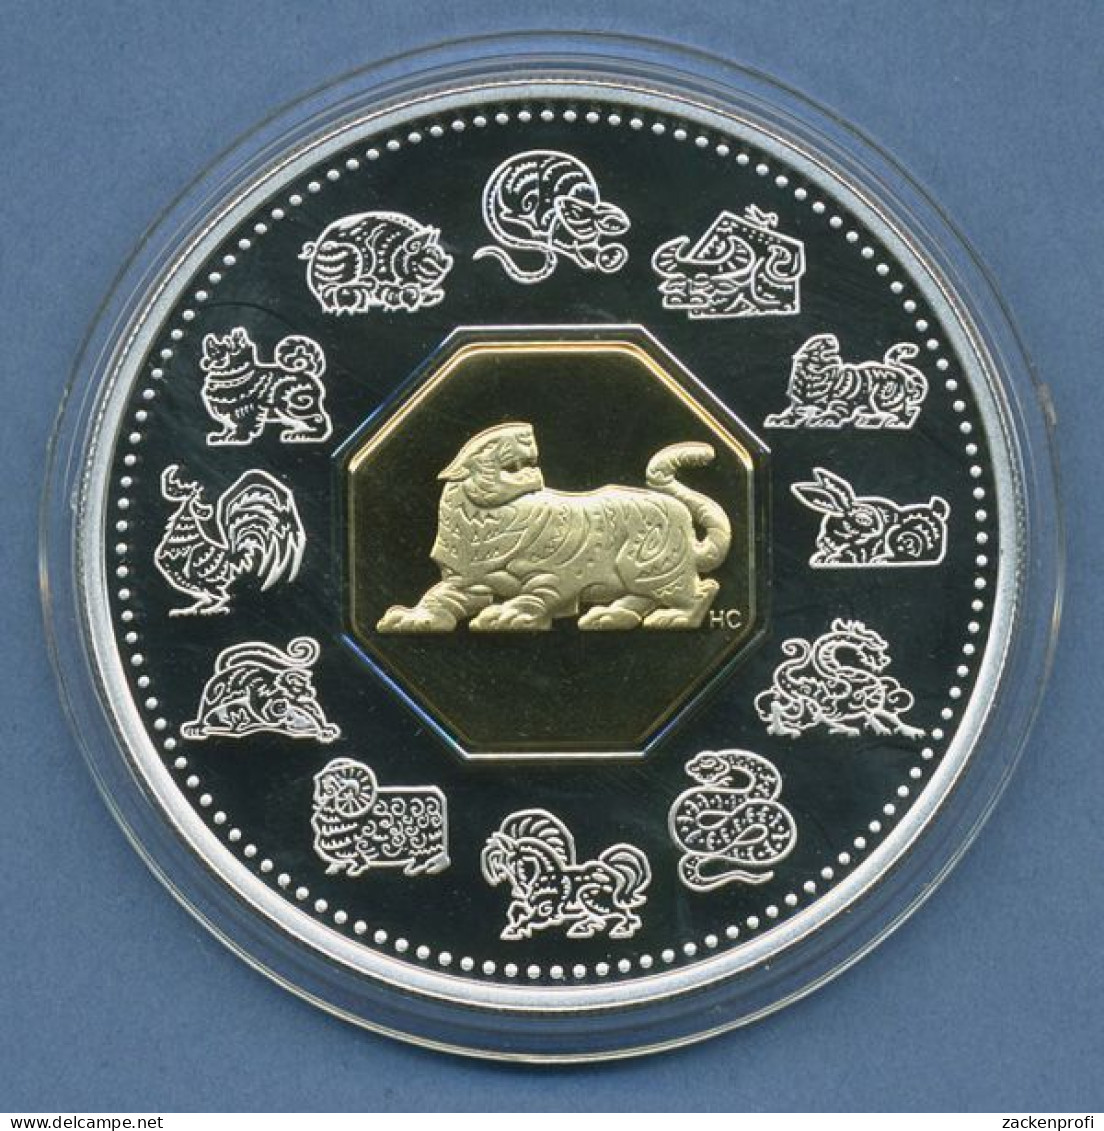 Kanada 15 Dollar 1998, Jahr Des Tigers, Silber, KM 304 PP In Kapsel (m4674) - Canada